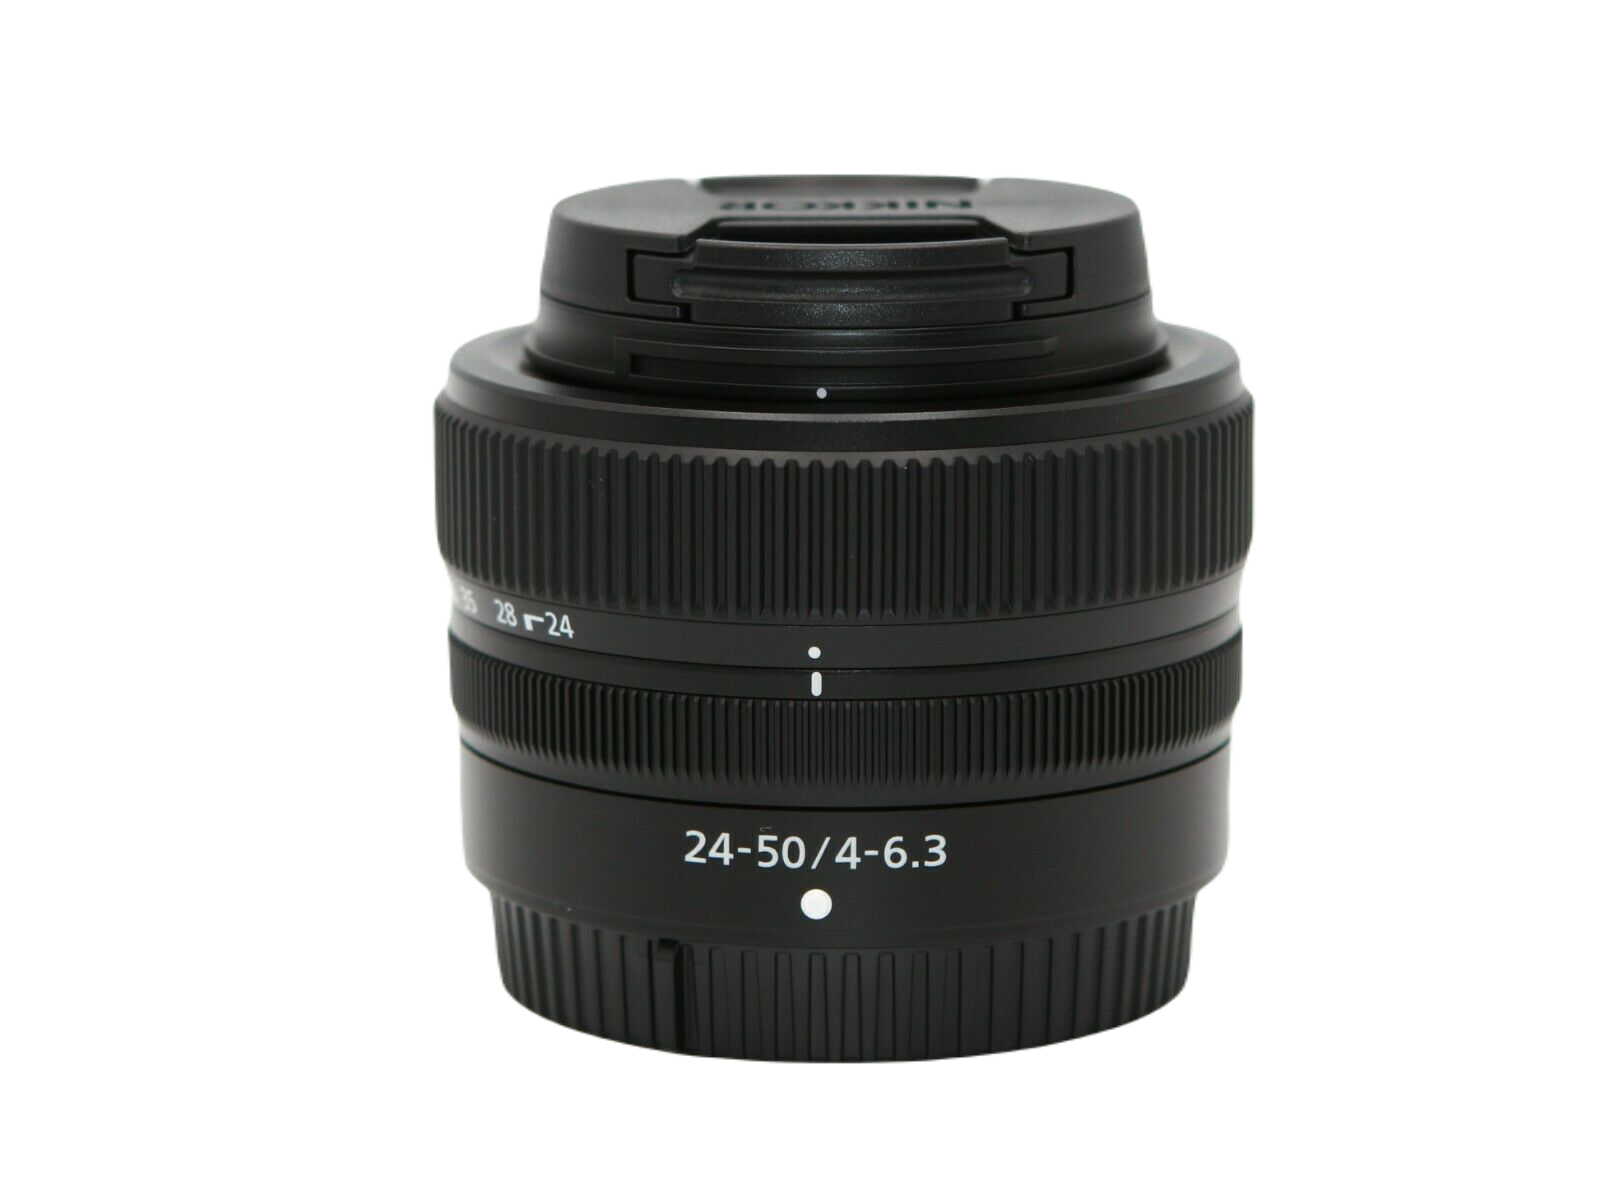 Nikon Z 24-50mm F/4-6.3 Zoom Lens - 2 Year Warranty - FREE